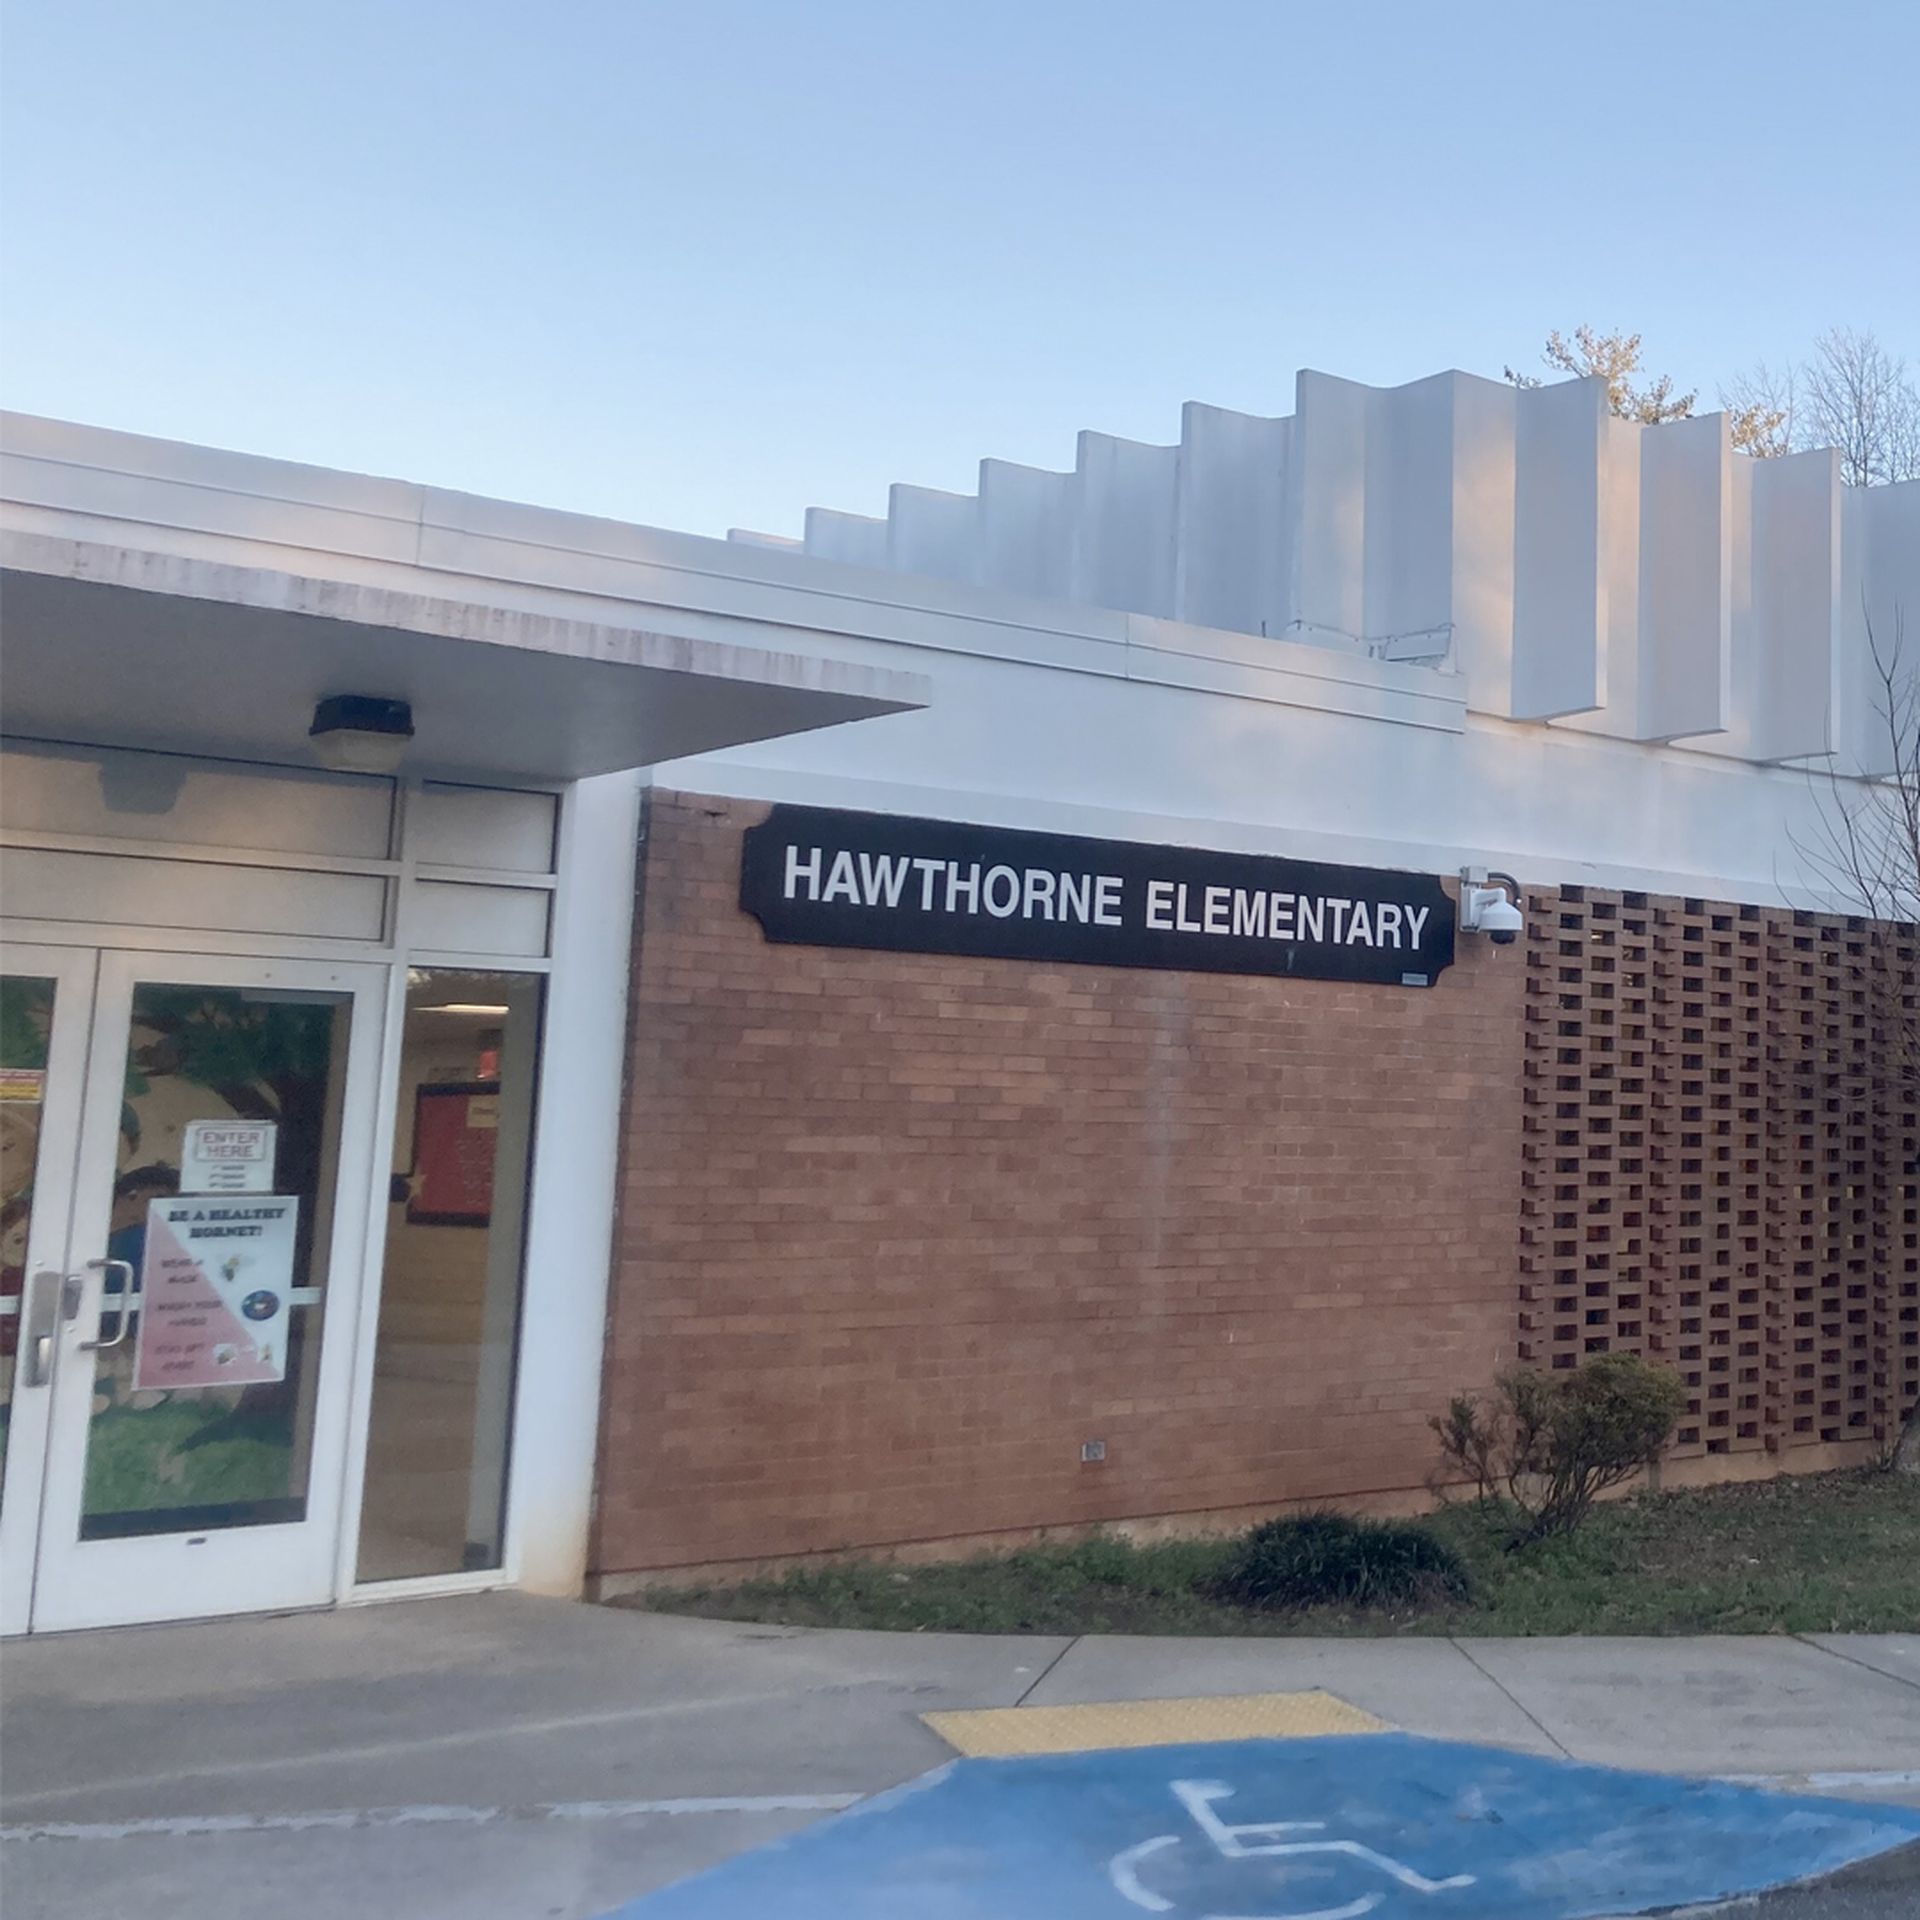 Information on the Hawthorne School District